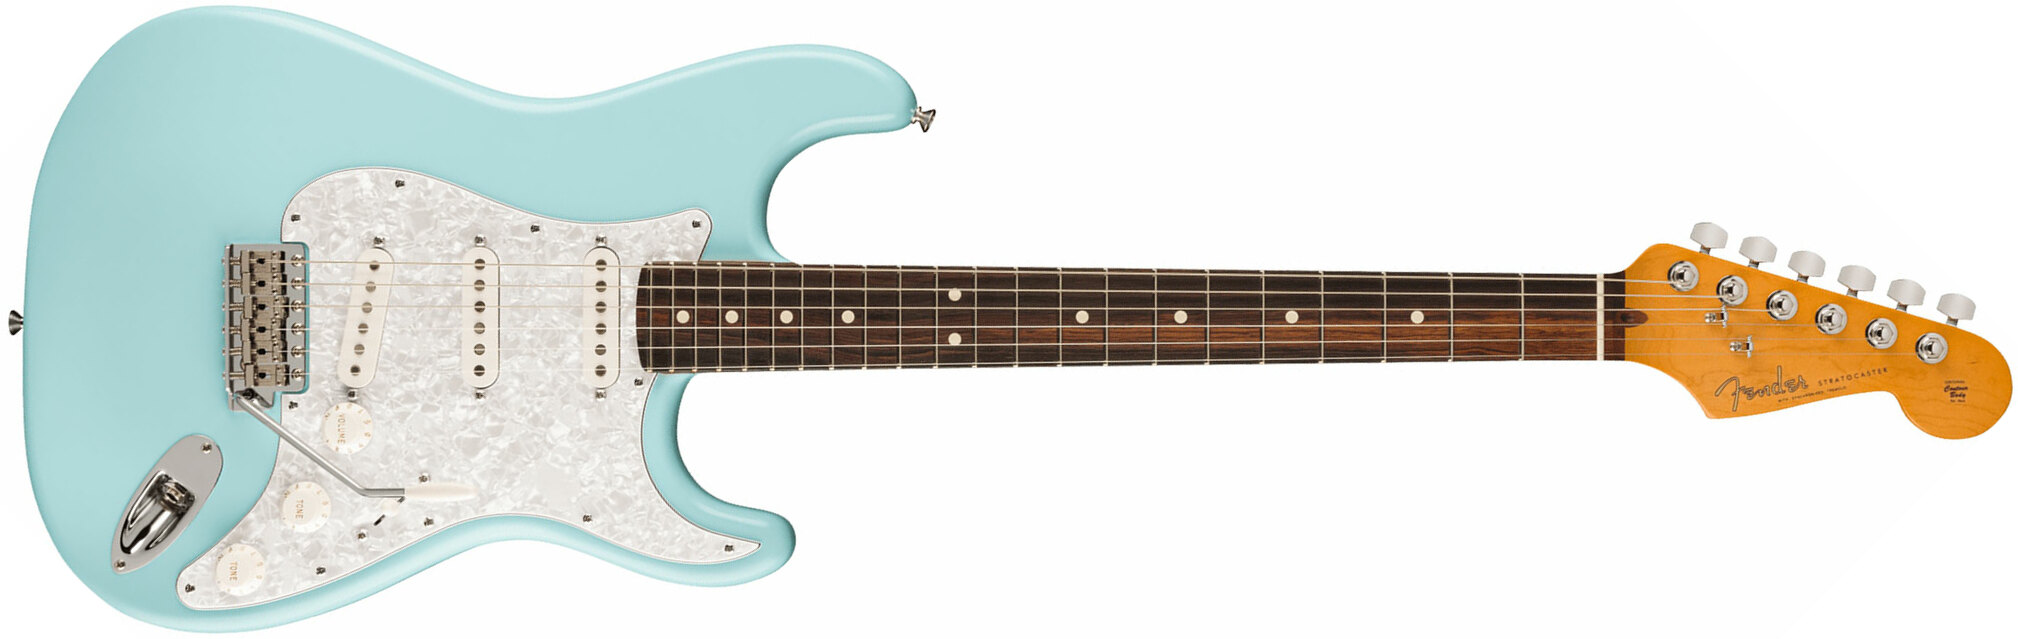 Fender Cory Wong Strat Ltd Signature Usa Stss Trem Rw - Daphne Blue - E-Gitarre in Str-Form - Main picture